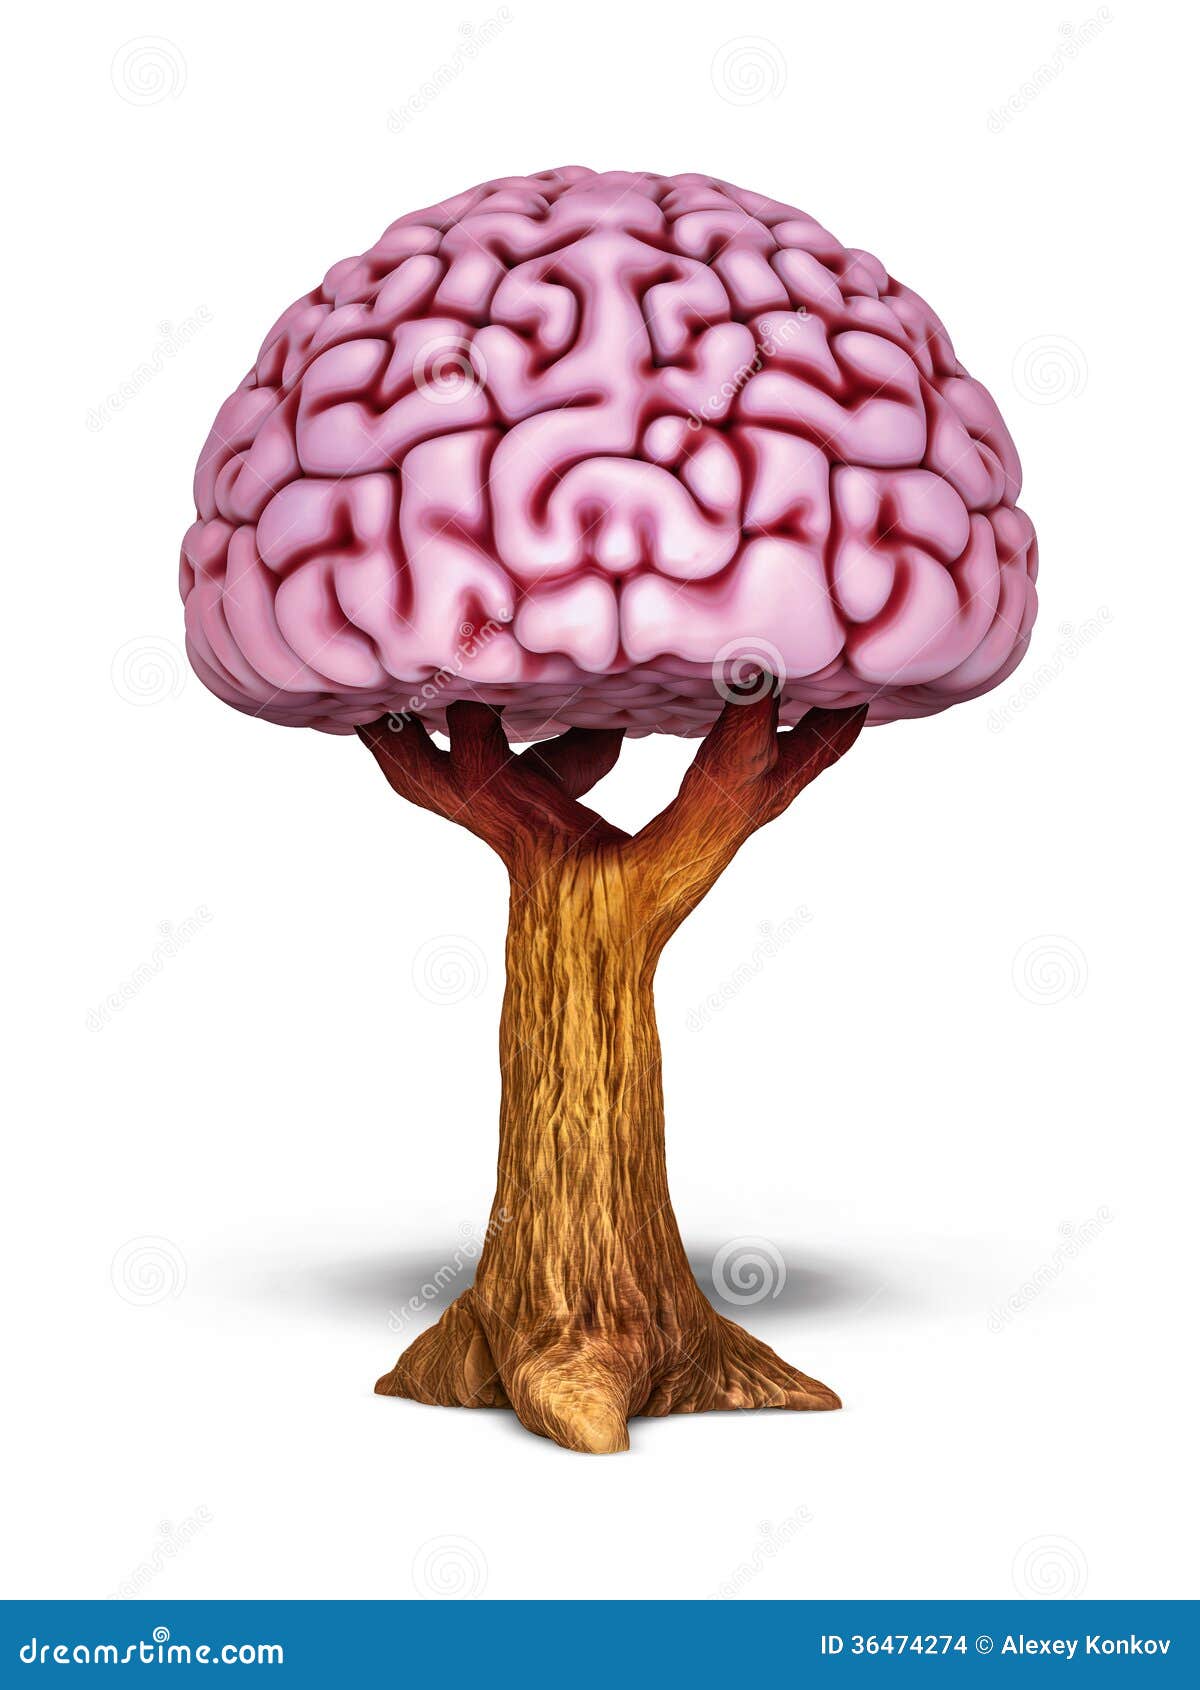 Brain Tree Illustration Stock Images - Image: 36474274